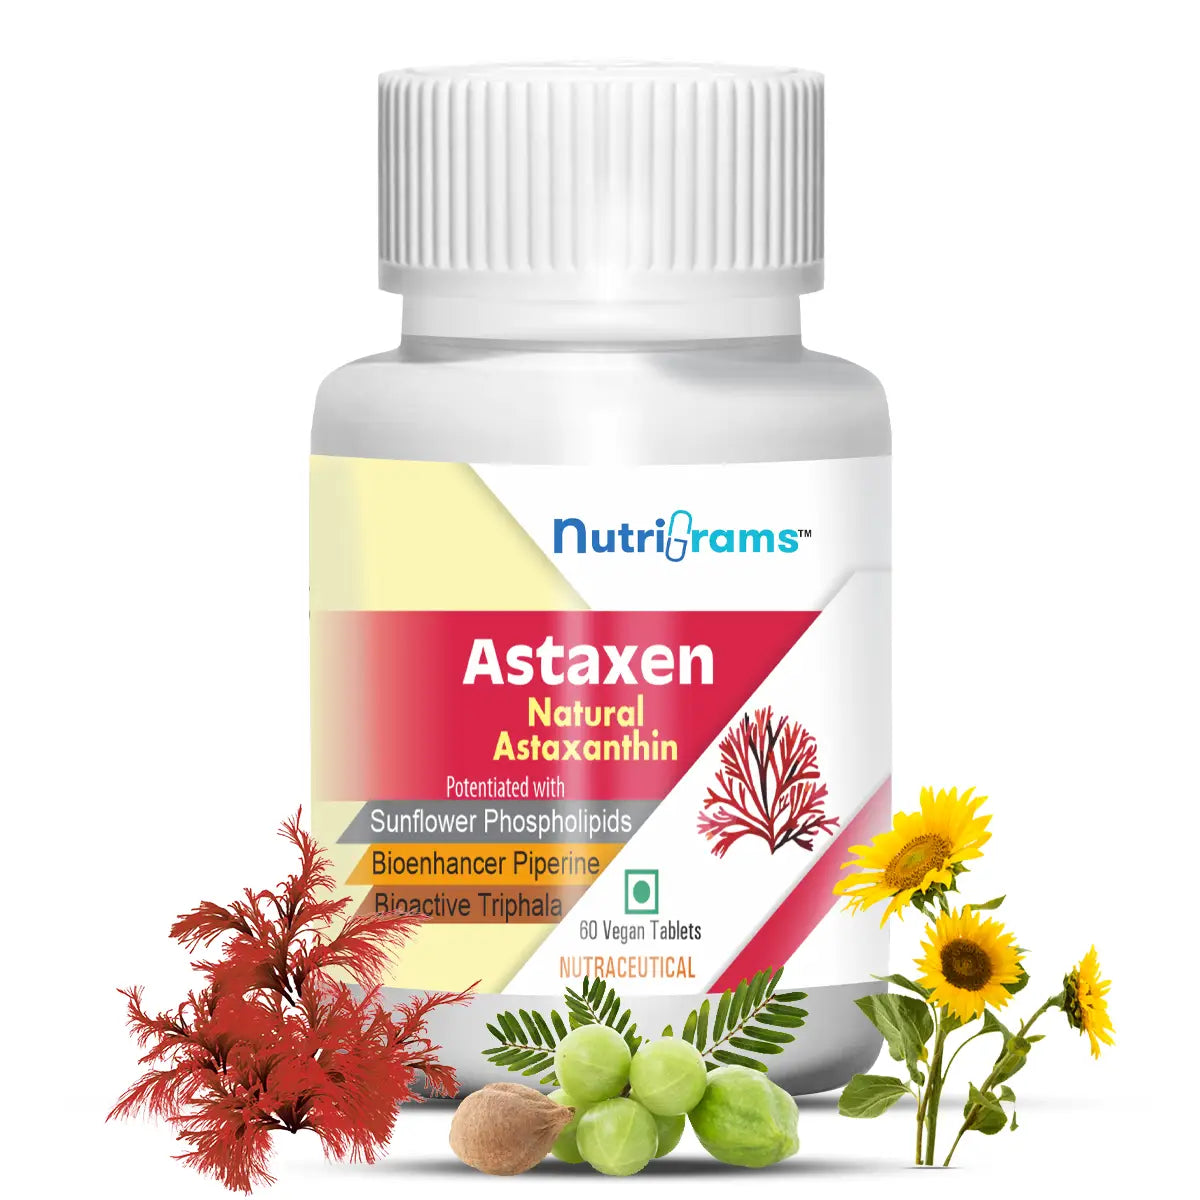 Astaxen: Natural Astaxanthin with Sunflower Phospholipids Supplement